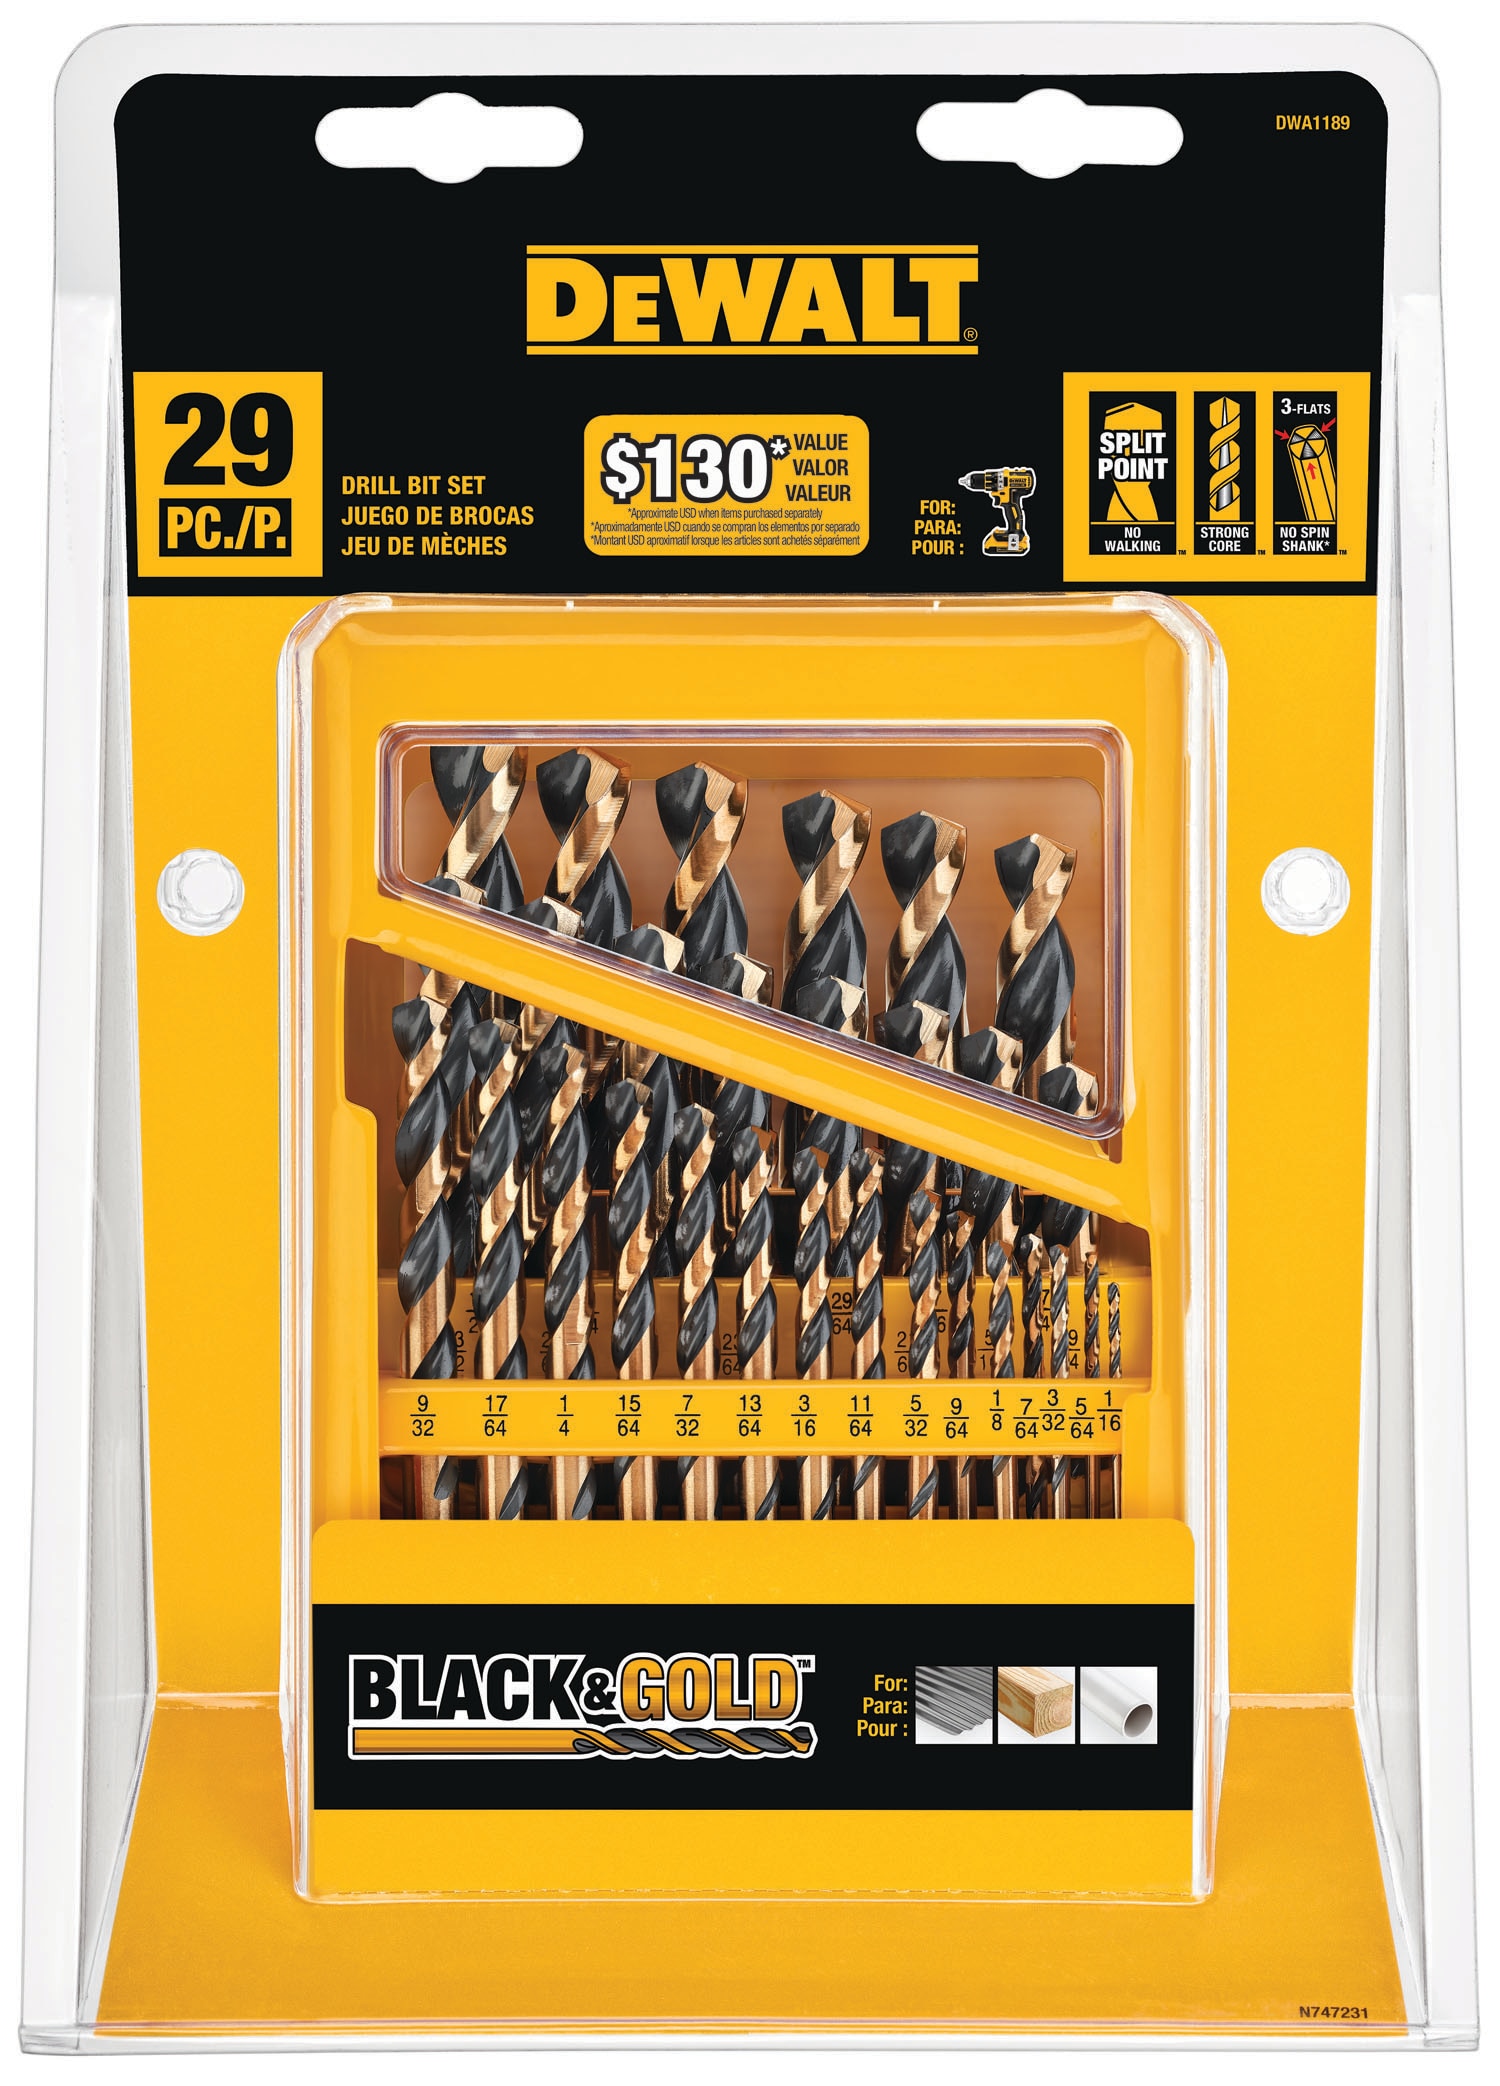 Black & Decker-Dewalt 1177  Black Oxide Drill Bit Set 20-Pi